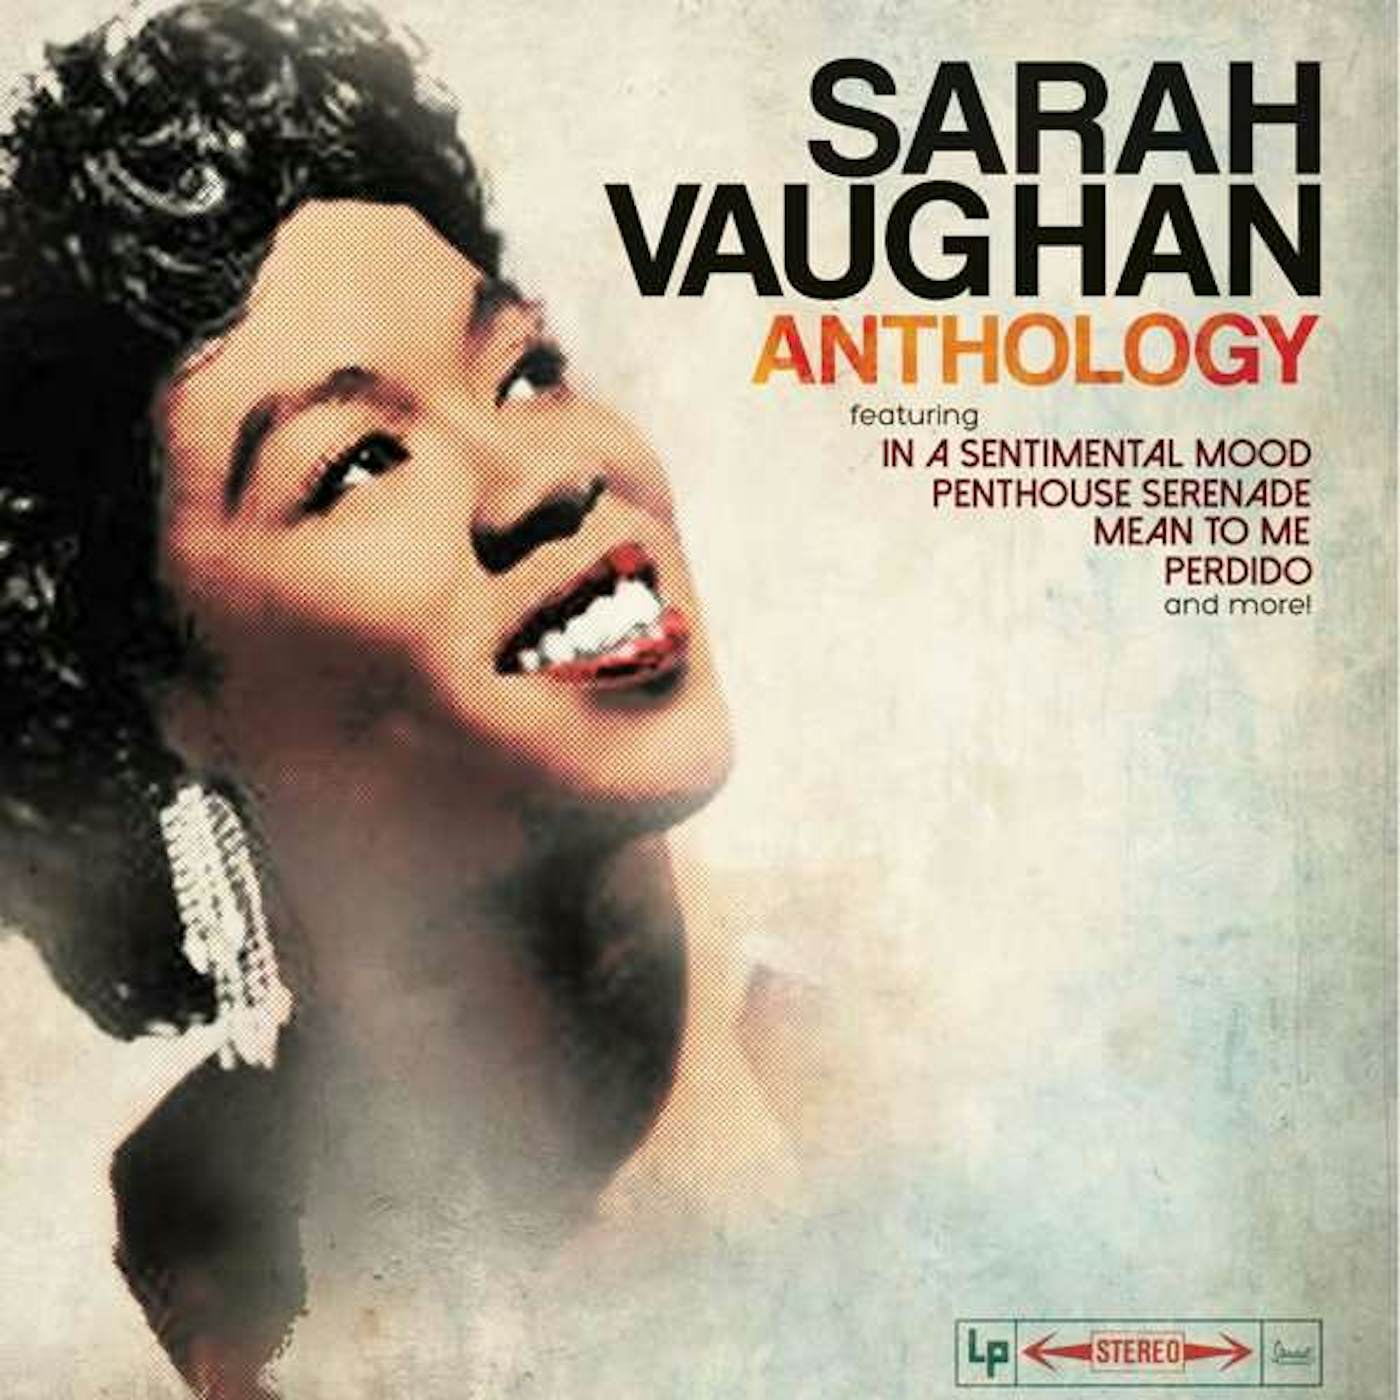 Sarah Vaughan ANTHOLOGY Vinyl Record